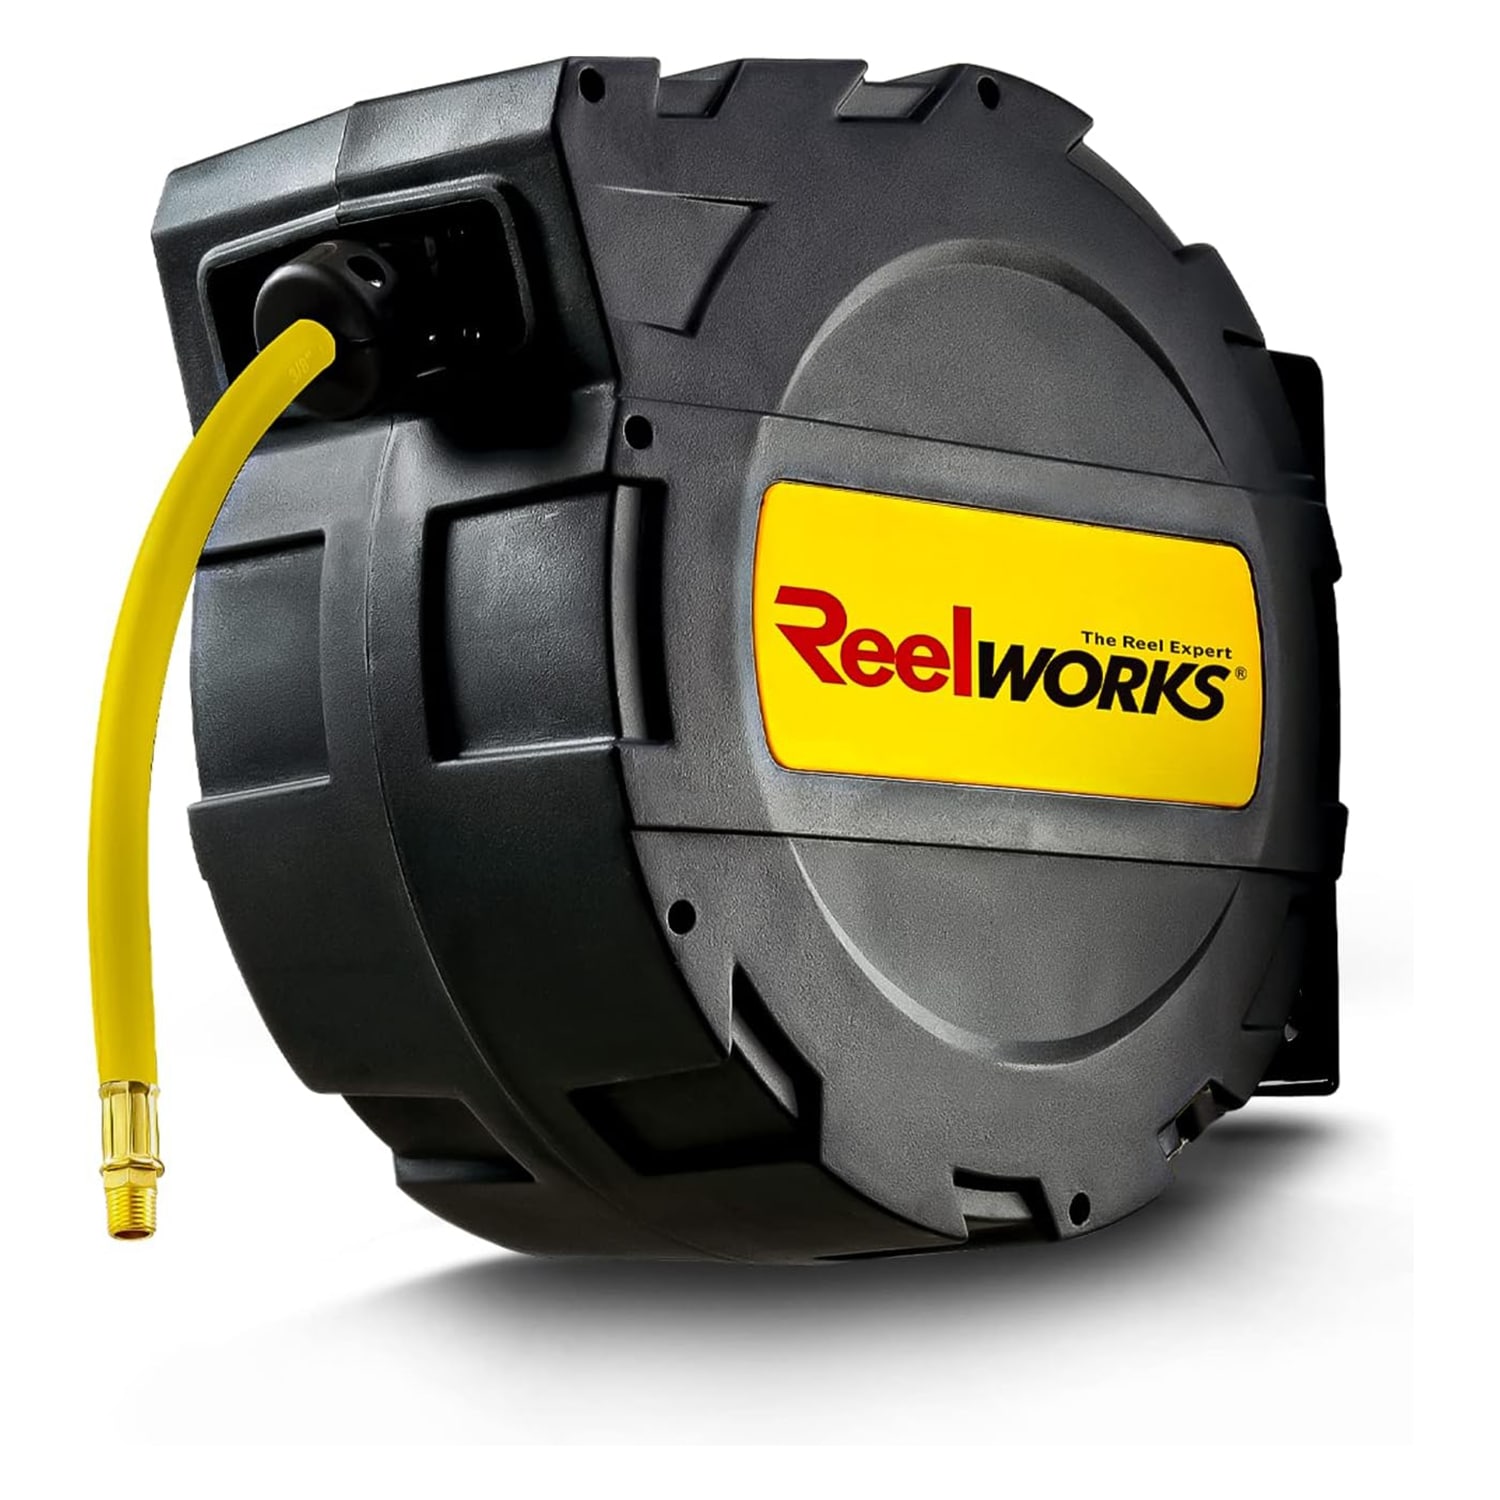 ReelWorks Industrial Retractable Air Hose Reel - 3/8 x 50'FT, 1/4 NP